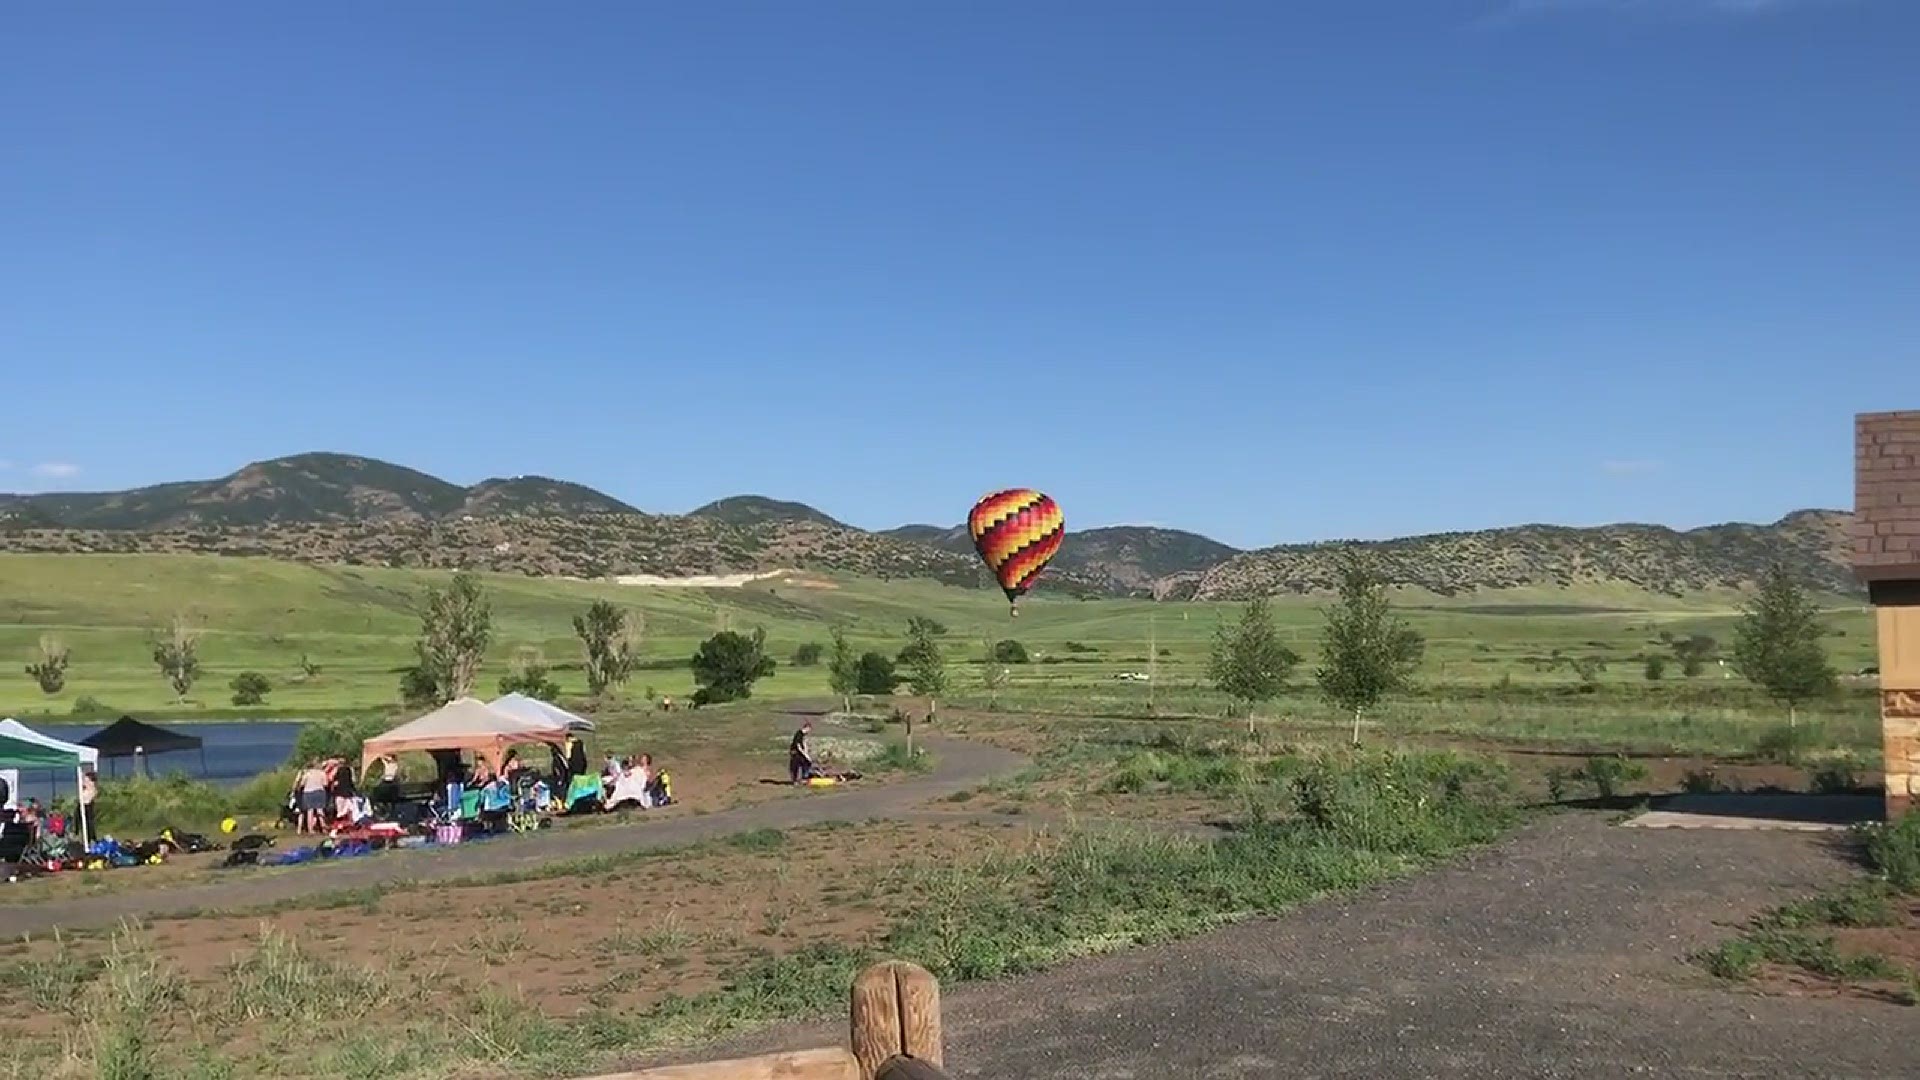 Chatfield State Park hot air balloon crash
Credit: Travis Dodd